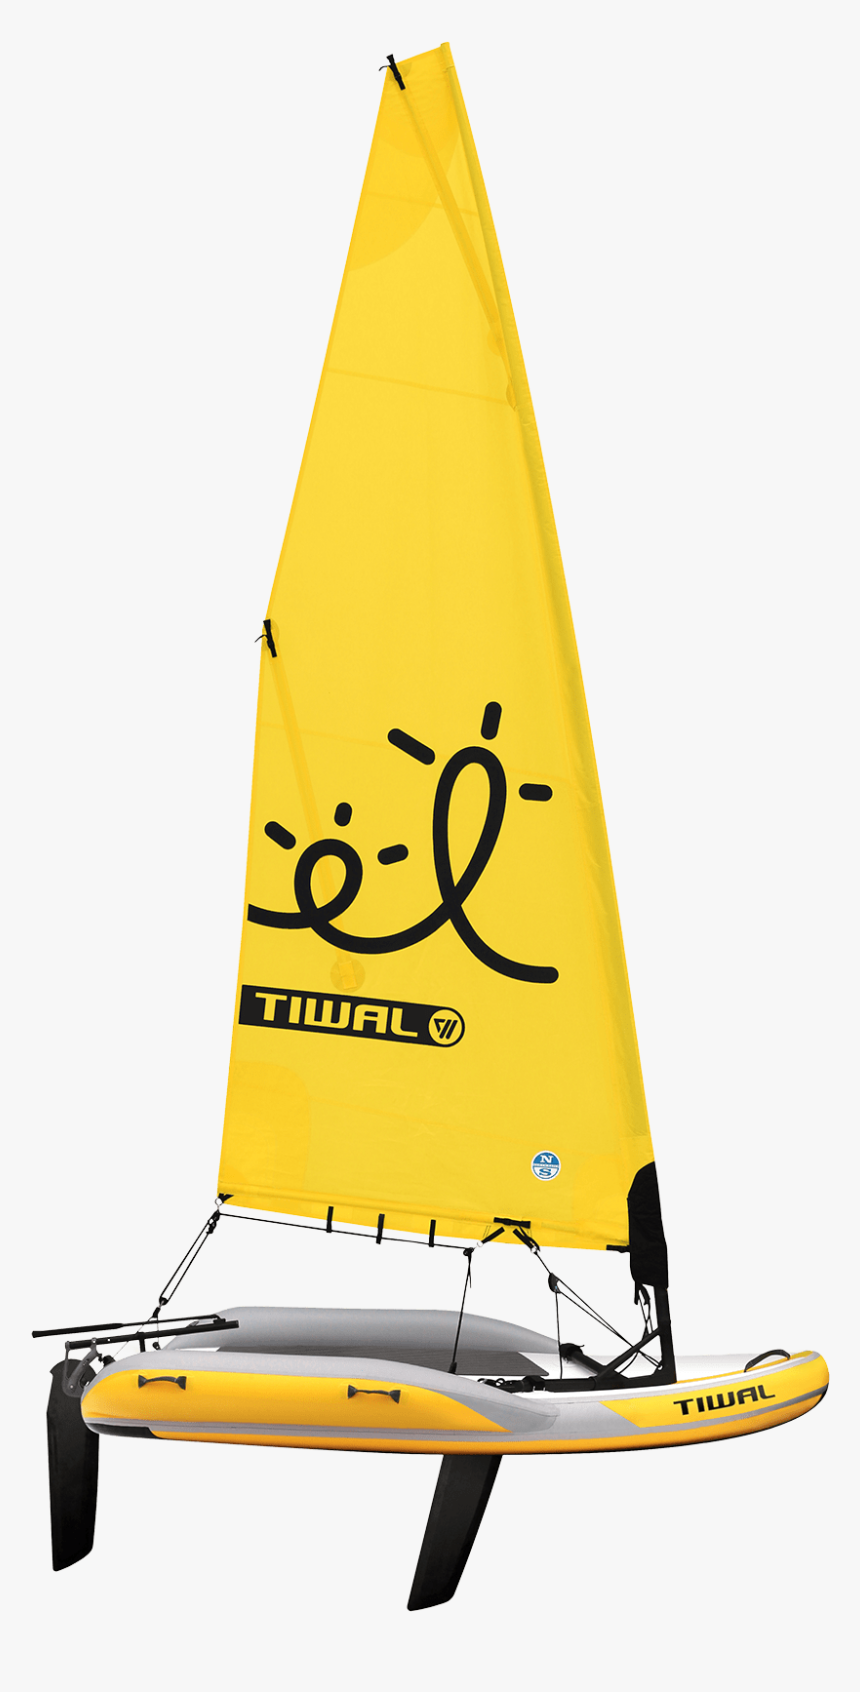 Tiwal 2 Inflatable Small Sailboat - Tiwal 2, HD Png Download, Free Download